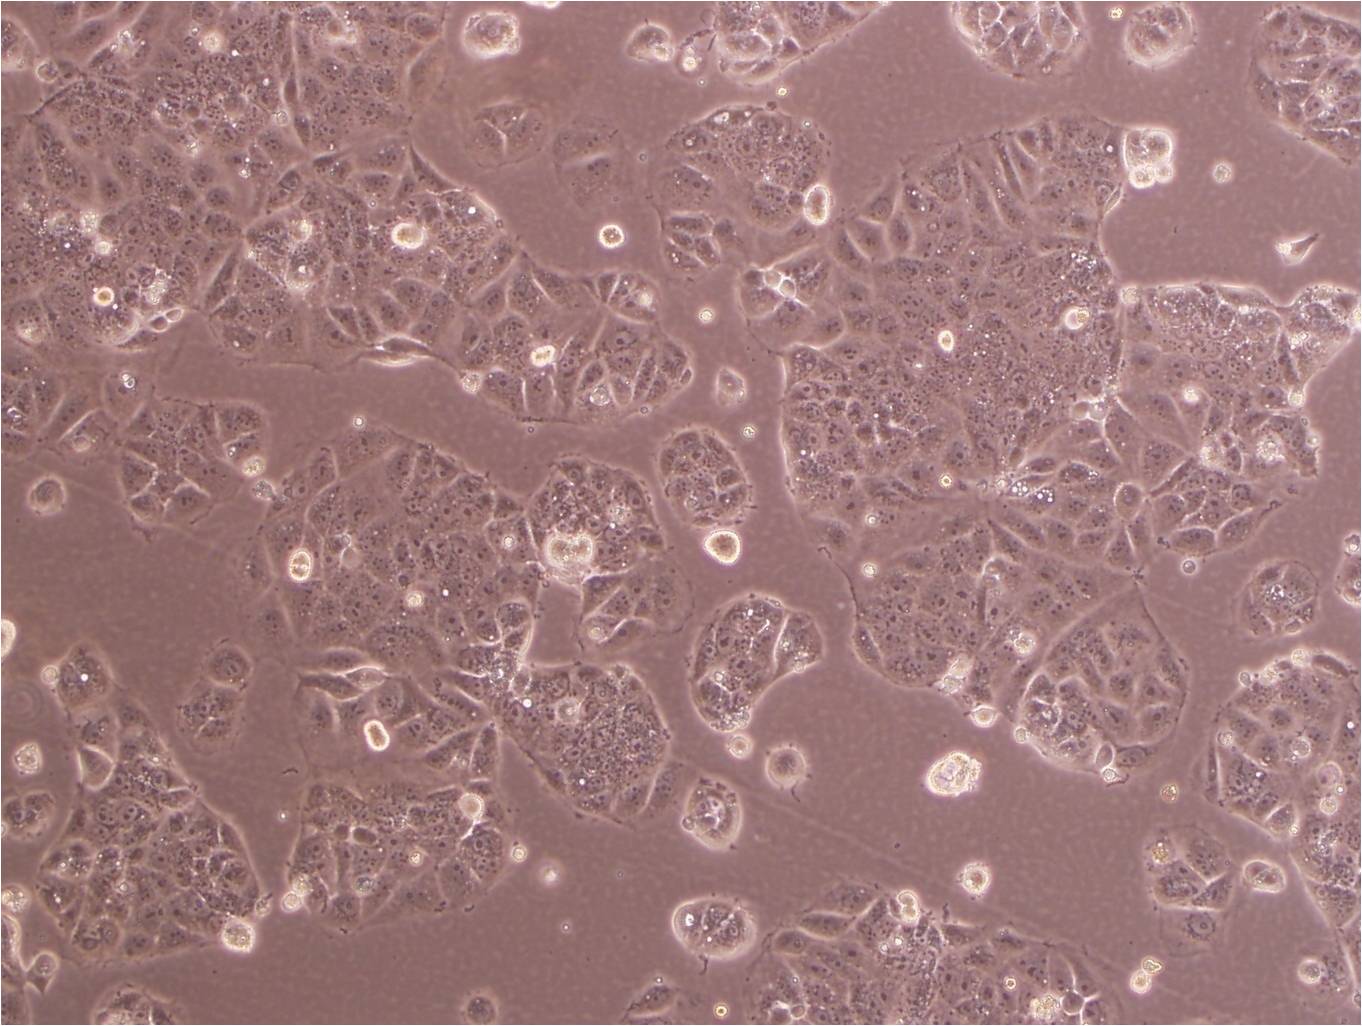 SK-N-MC Cells|人神经上皮瘤克隆细胞(包送STR鉴定报告),SK-N-MC Cells